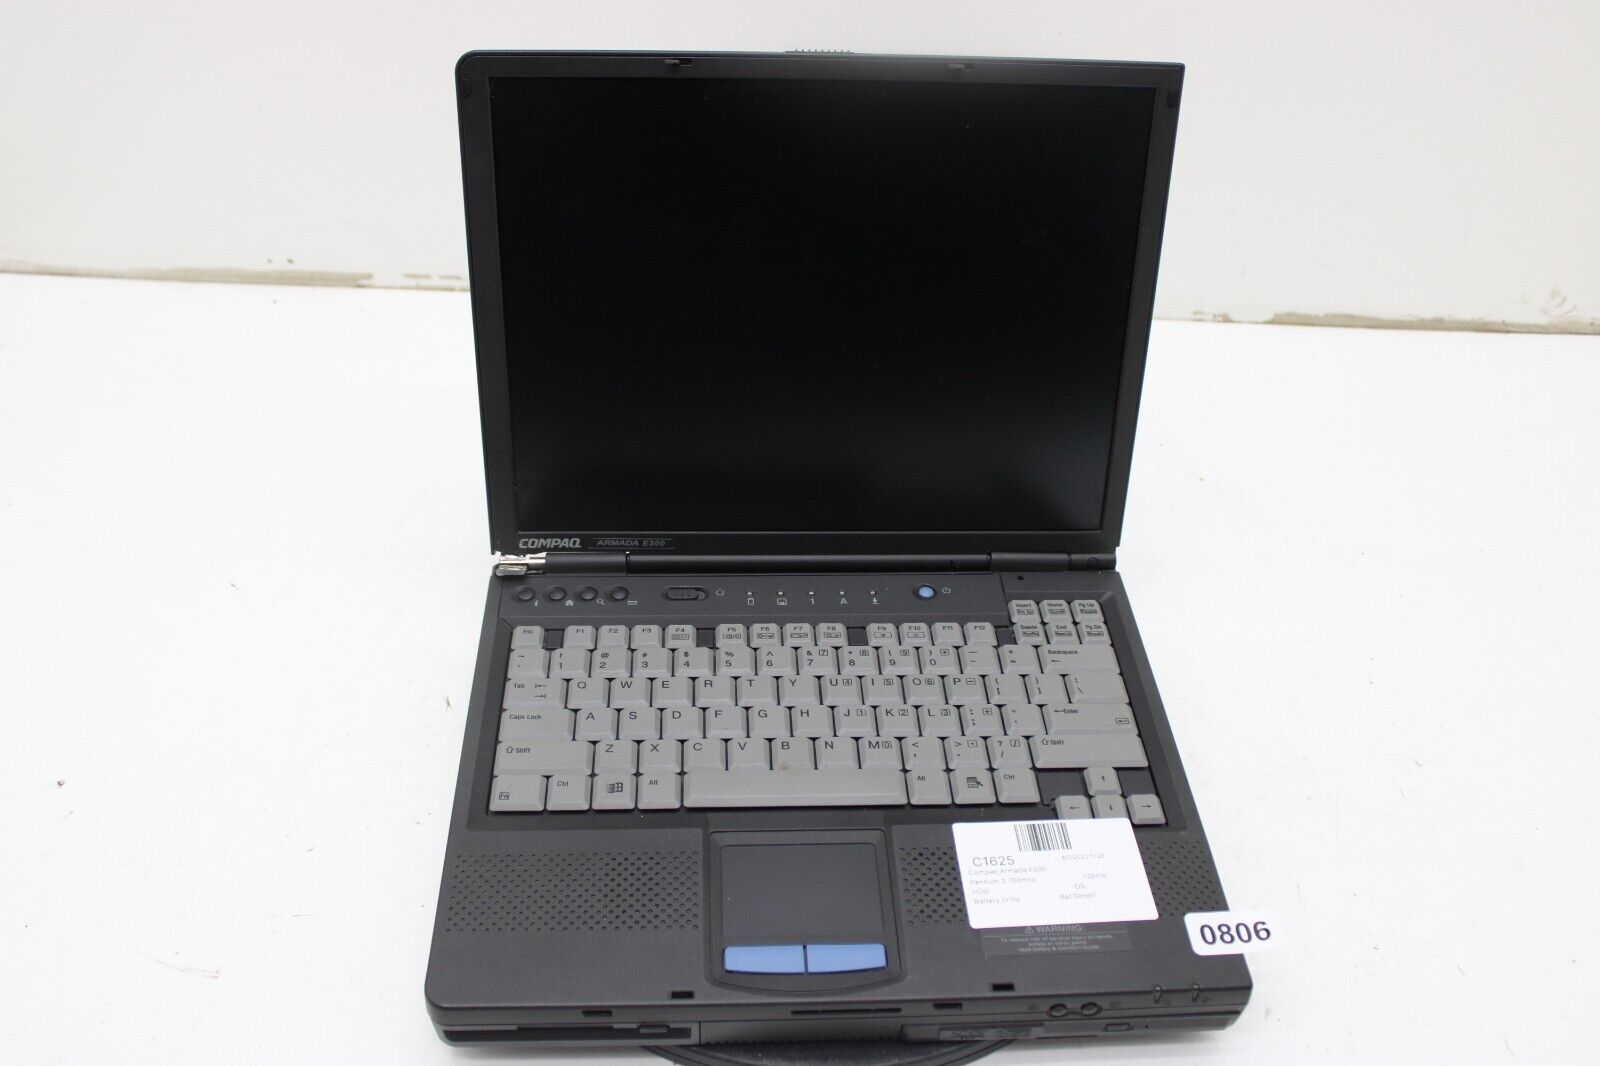 Compaq Armada E500 Laptop Intel Pentium 3 700GHz 128MB Ram No HDD or Battery